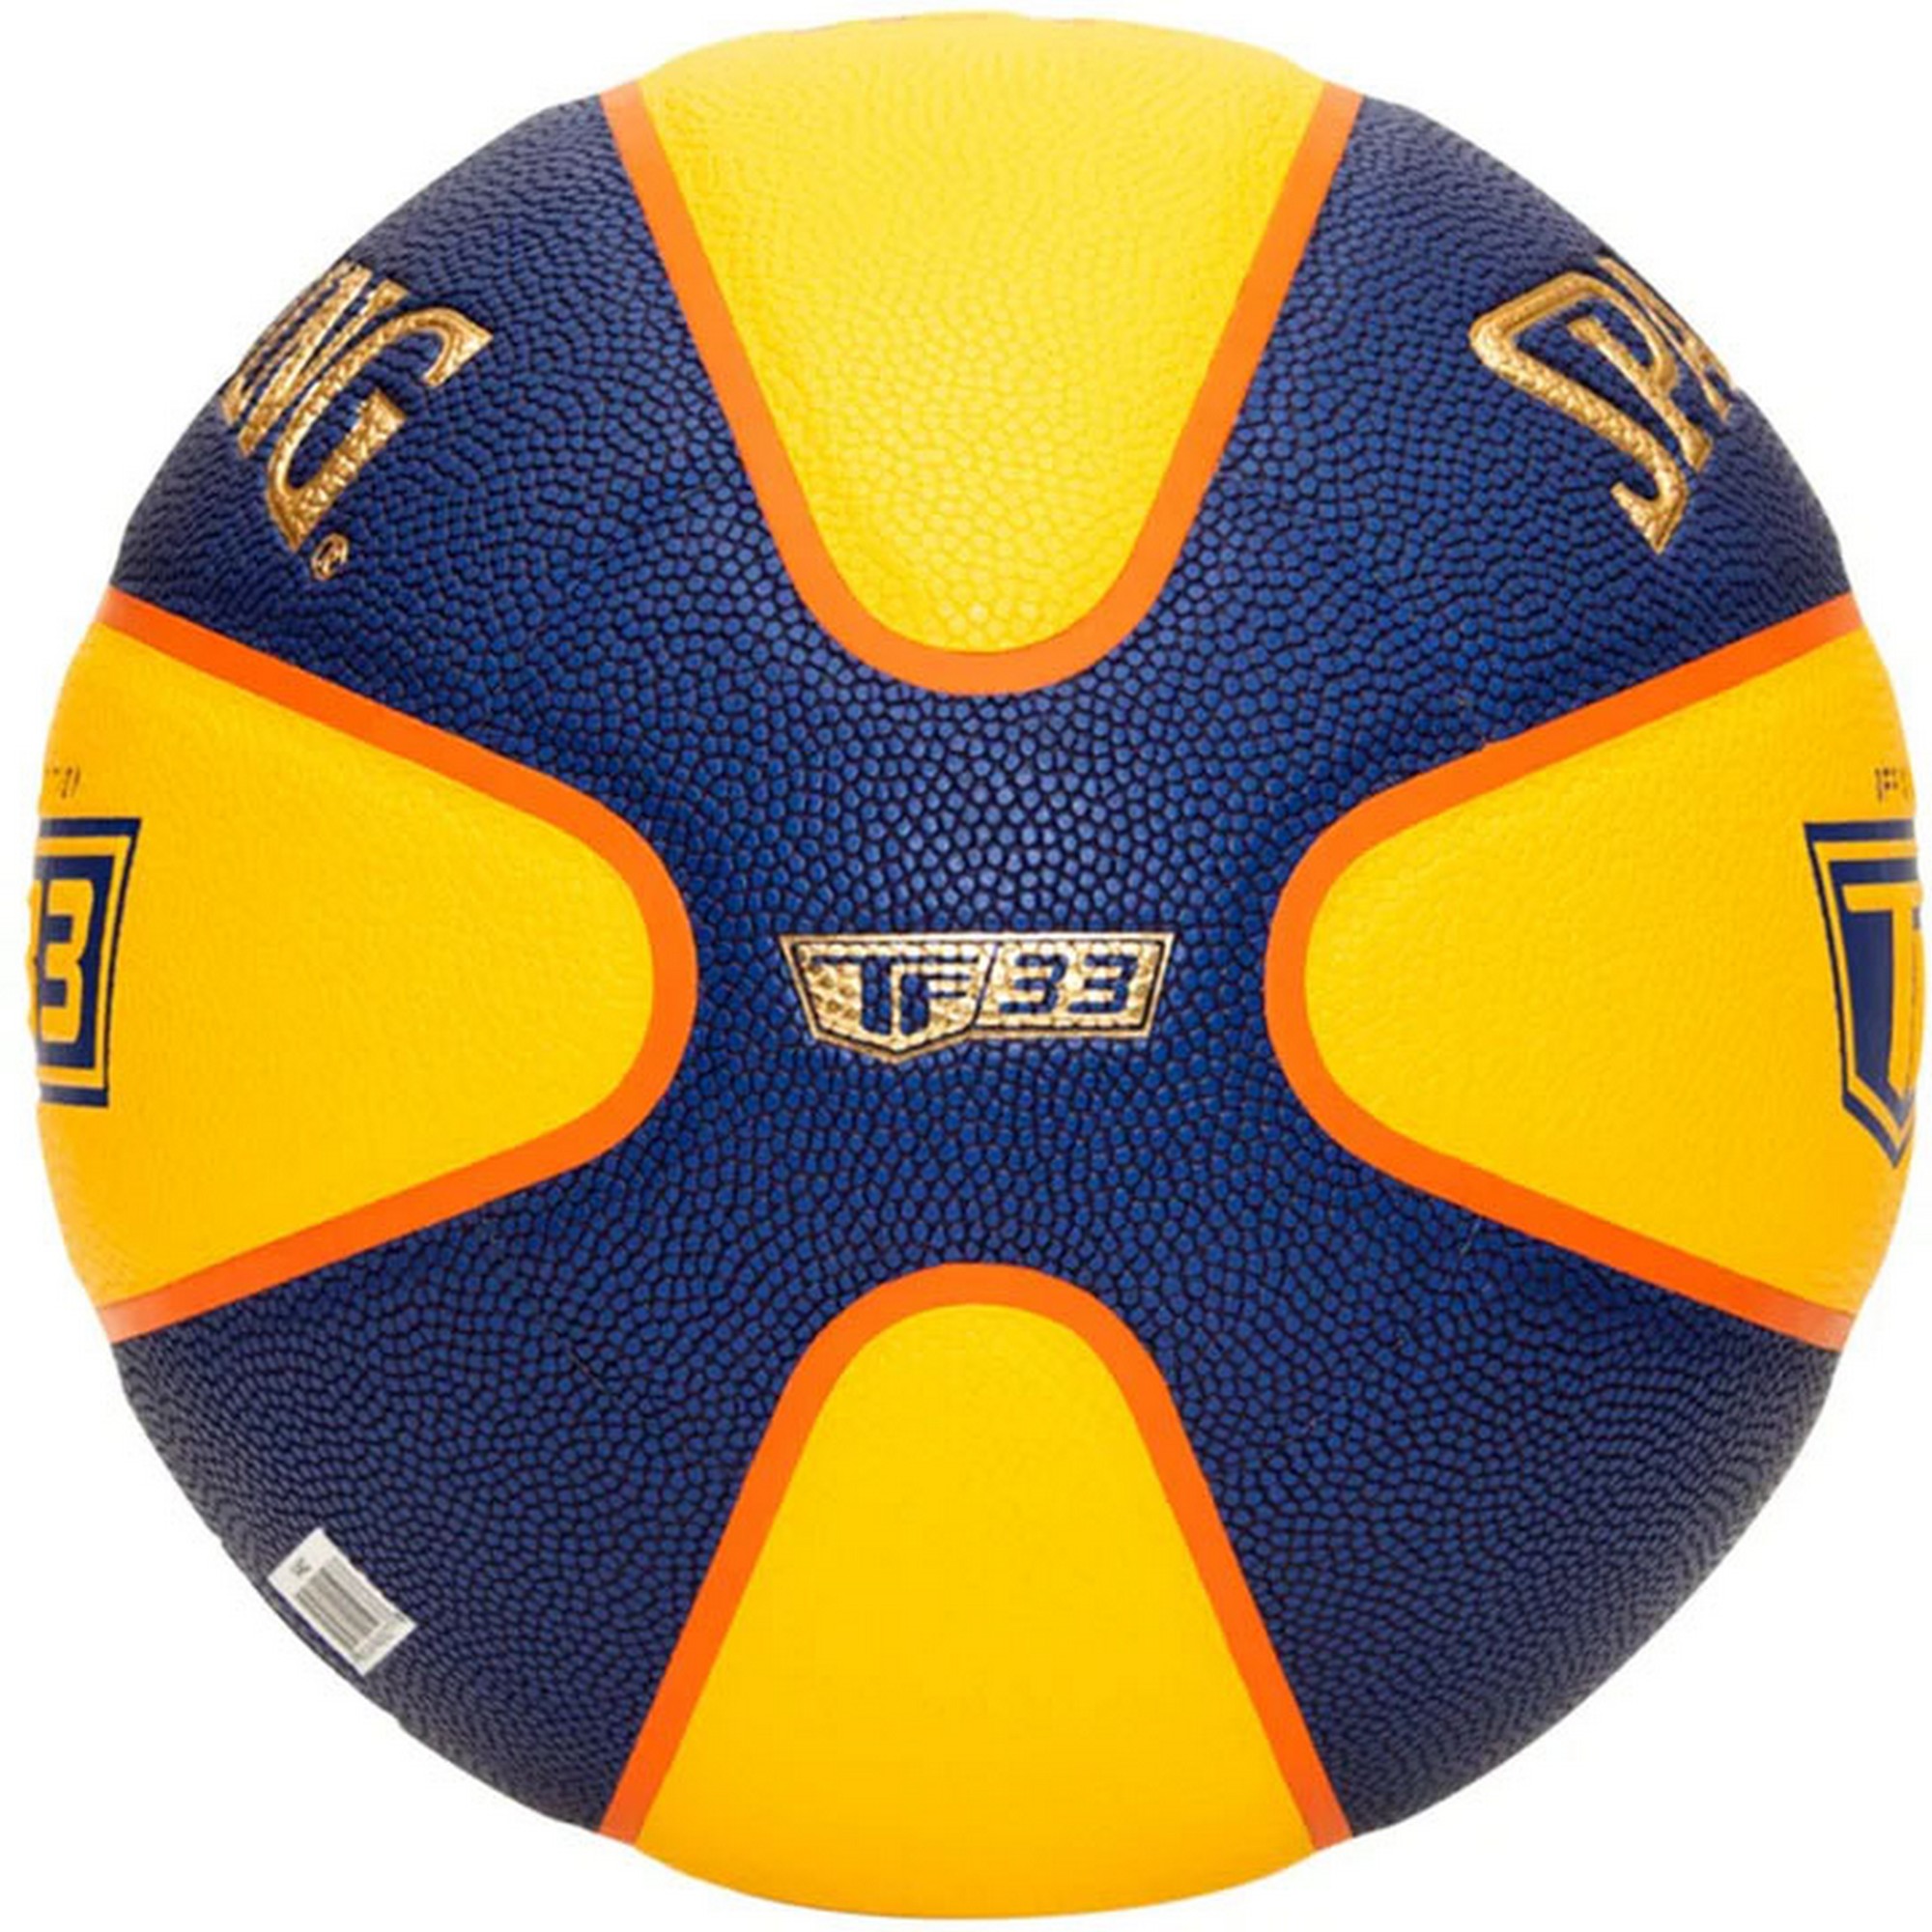 Мяч баскетбольный Spalding TF-33 Gold, FIBA Approved 76862z р.6 2000_2000